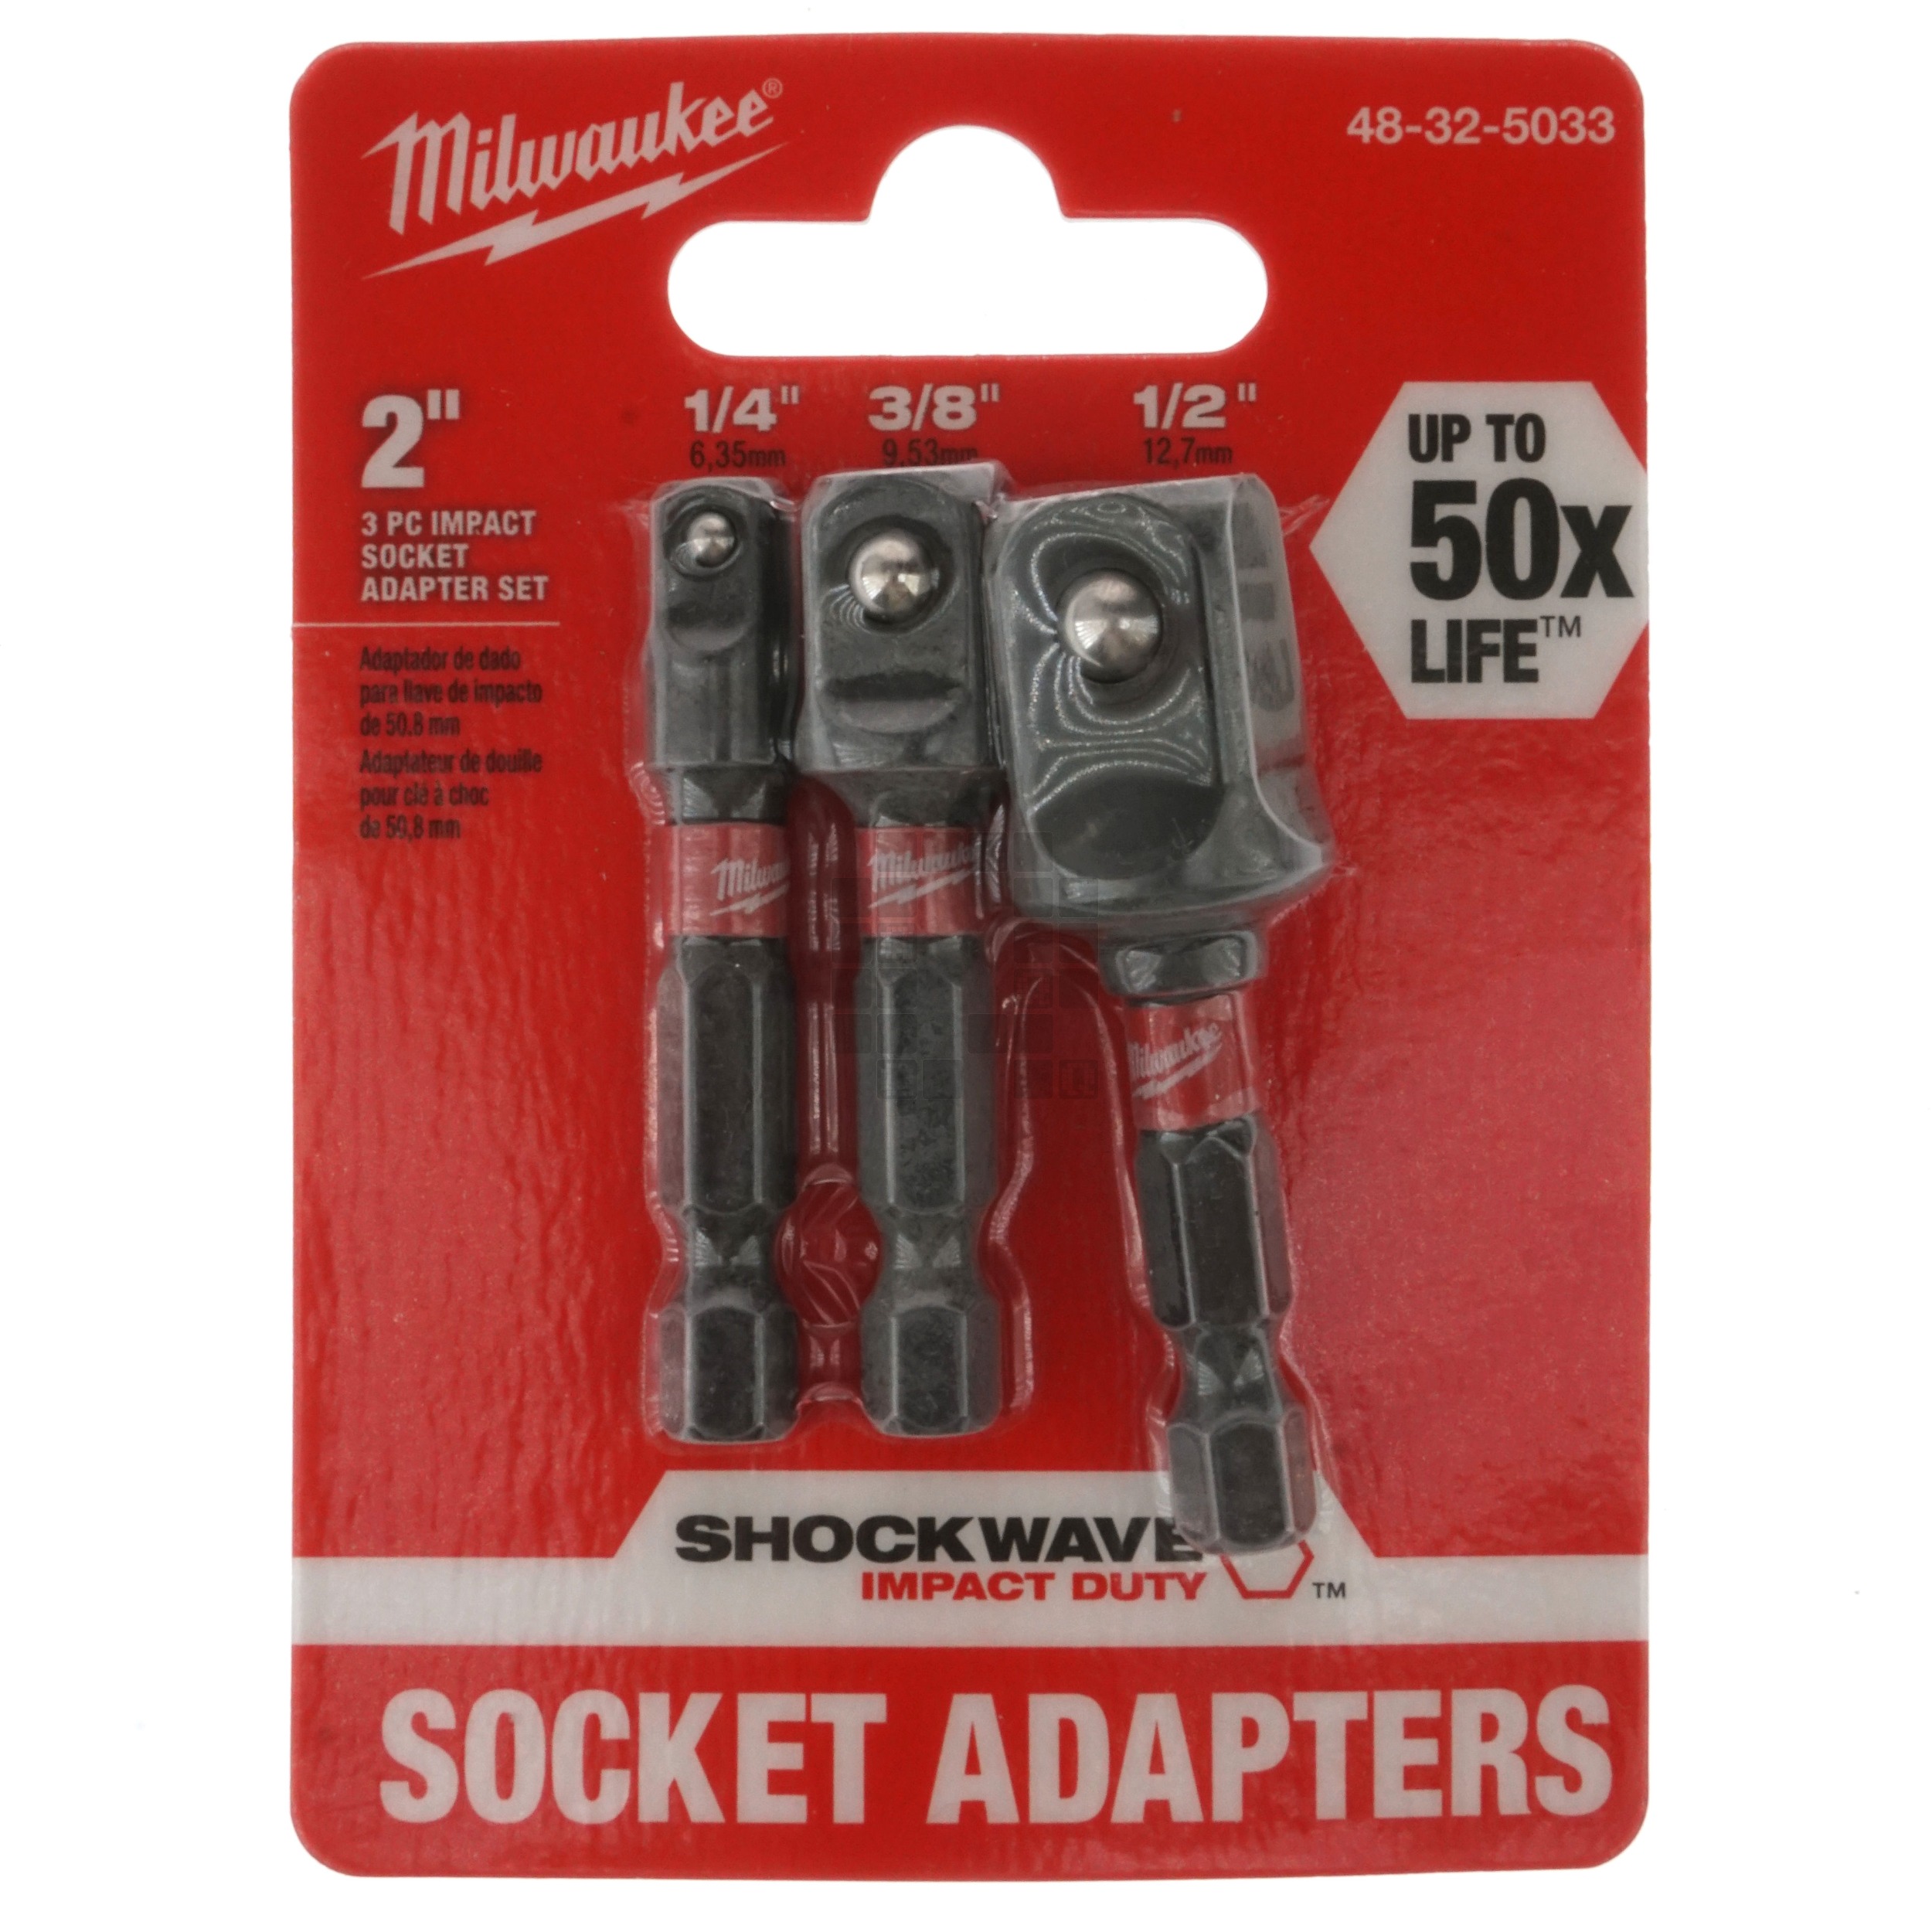 Milwaukee 48-32-5033 SHOCKWAVE Impact Duty 2" Socket Adapter 3-Piece Set